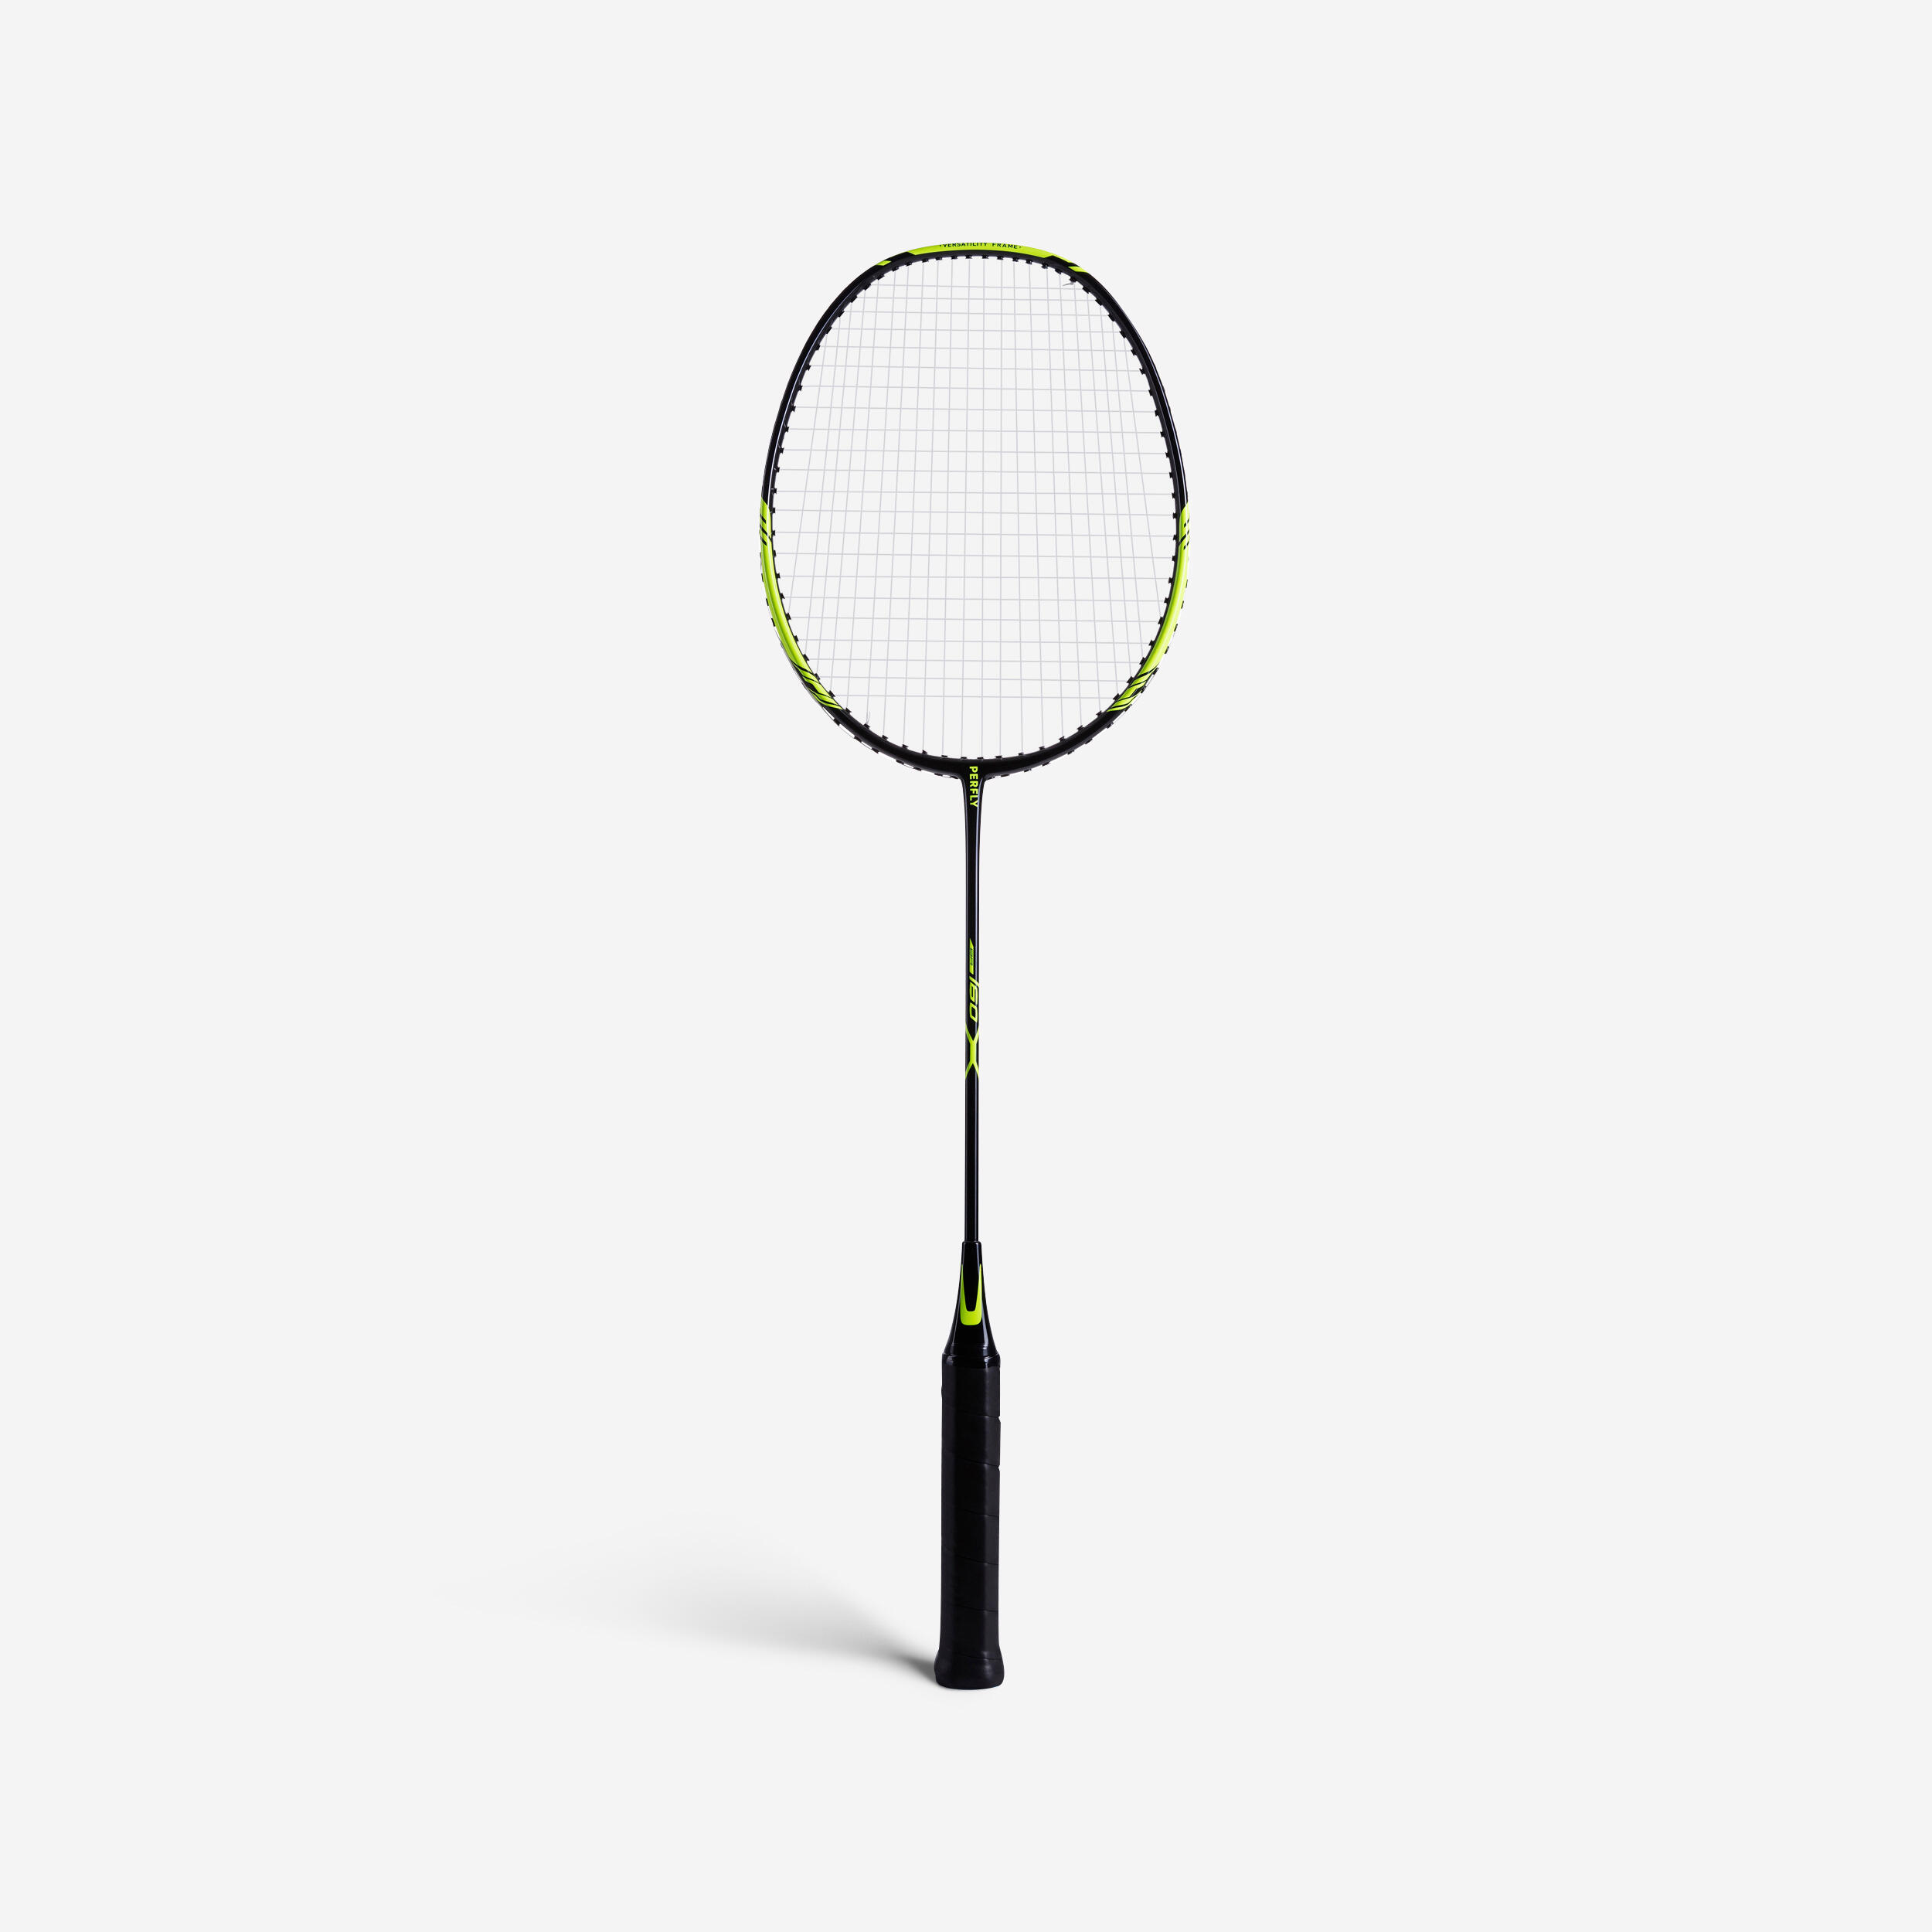 Rachetă Badminton BR160 Negru-Verde Adulți La Oferta Online decathlon imagine La Oferta Online